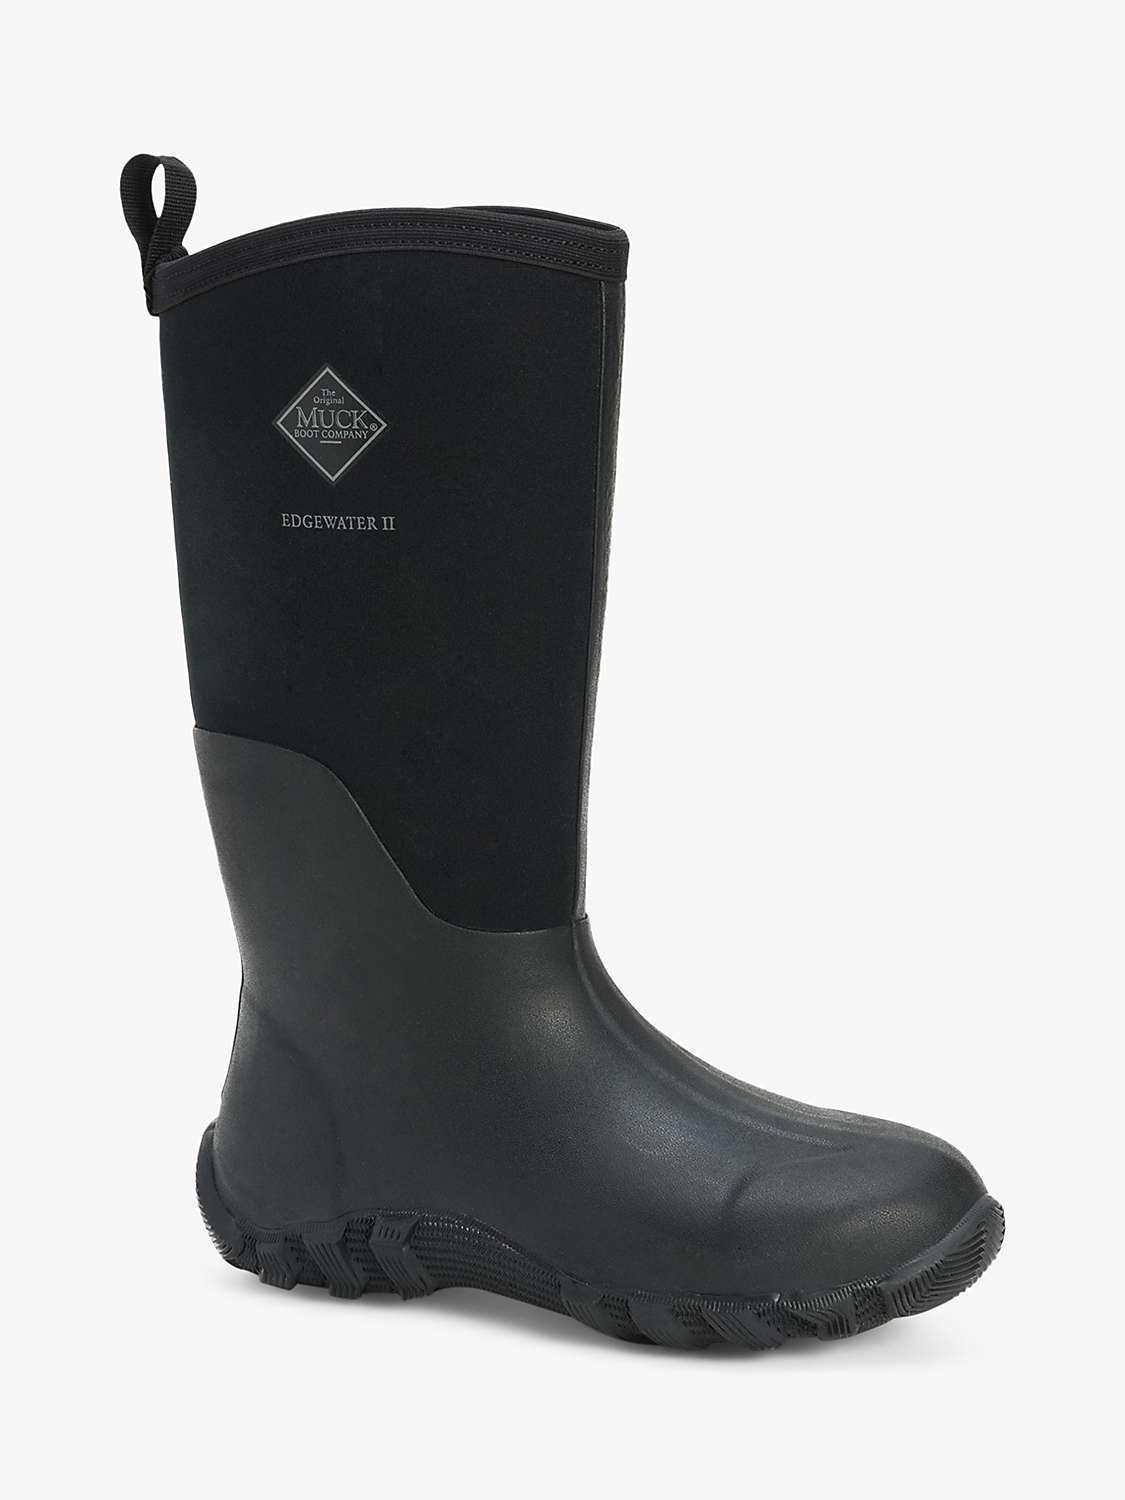 Muck Edgewater II All Purpose Boots, Black at John Lewis & Partners